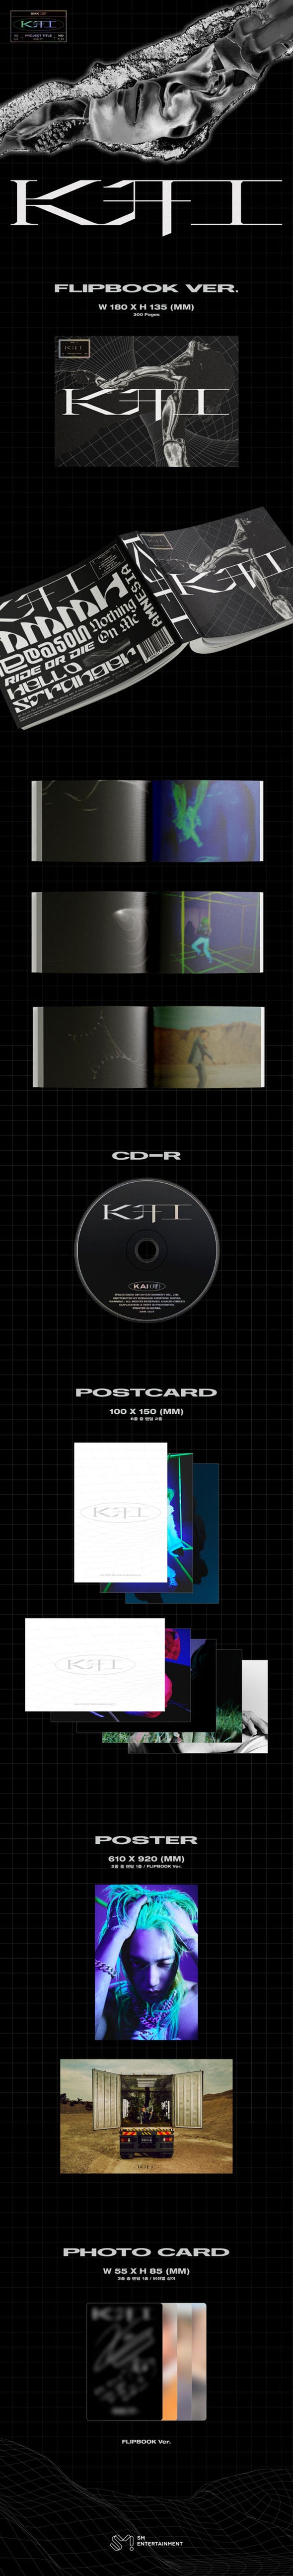 KAI (EXO) - 1st Mini Album Flip Book